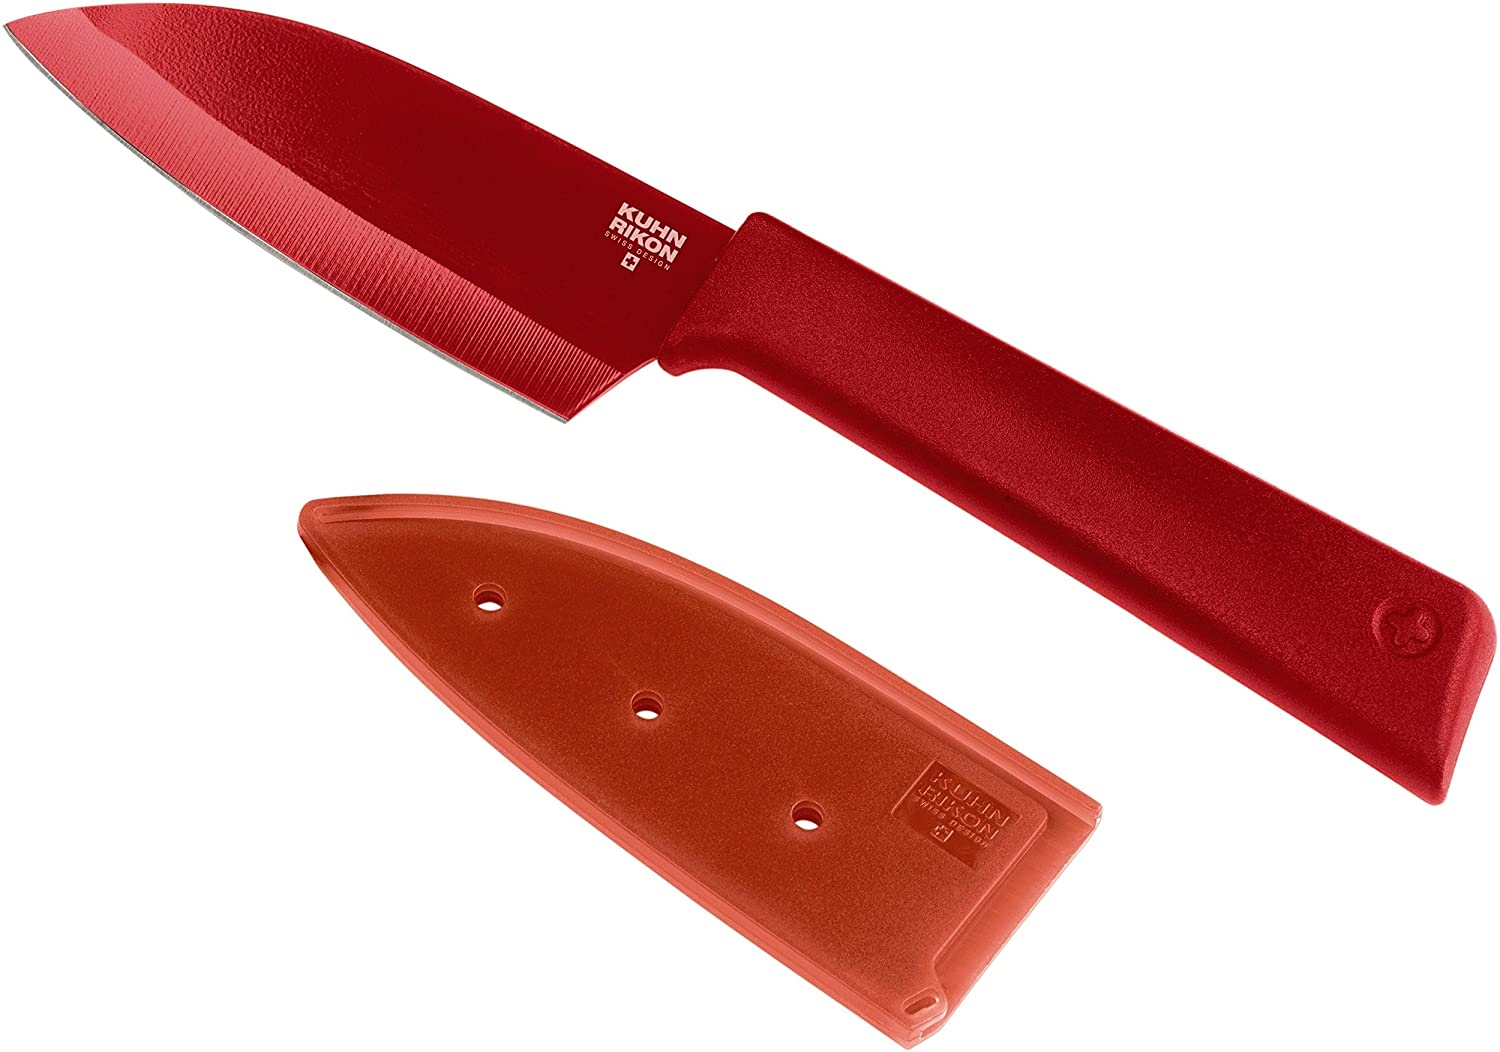 Kuhn Rikon Colori+ Non-Stick Small Santoku Knife with Safety Sheath, 22 cm, Red